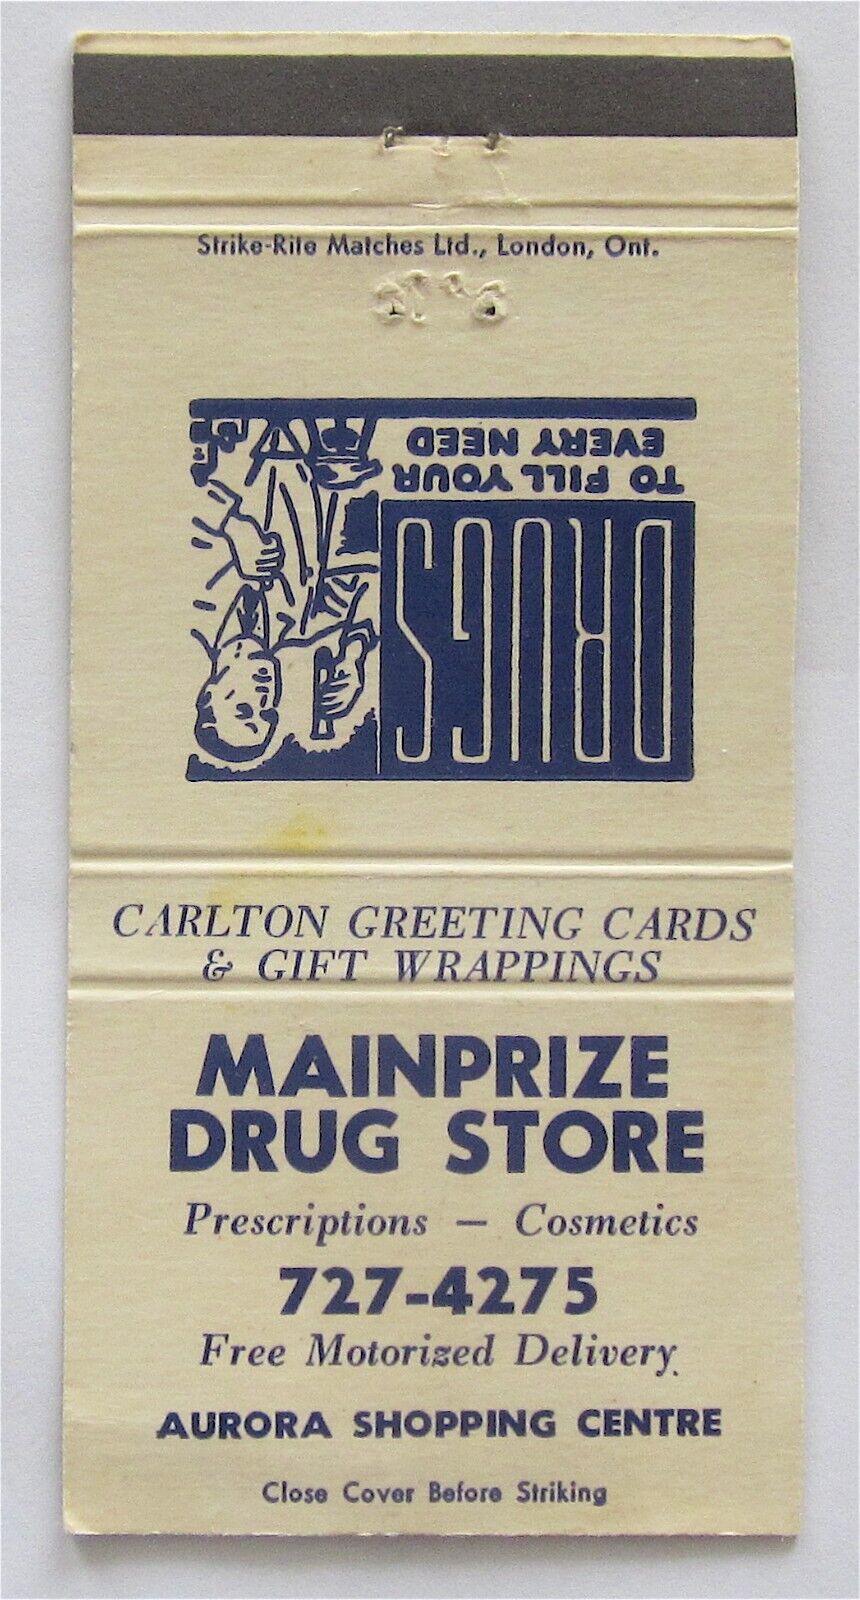 MAINPRIZE DRUG STORE, AURORA SHOPPING CENTER, ONTARIO, CANADA MATCHBOOK COVER